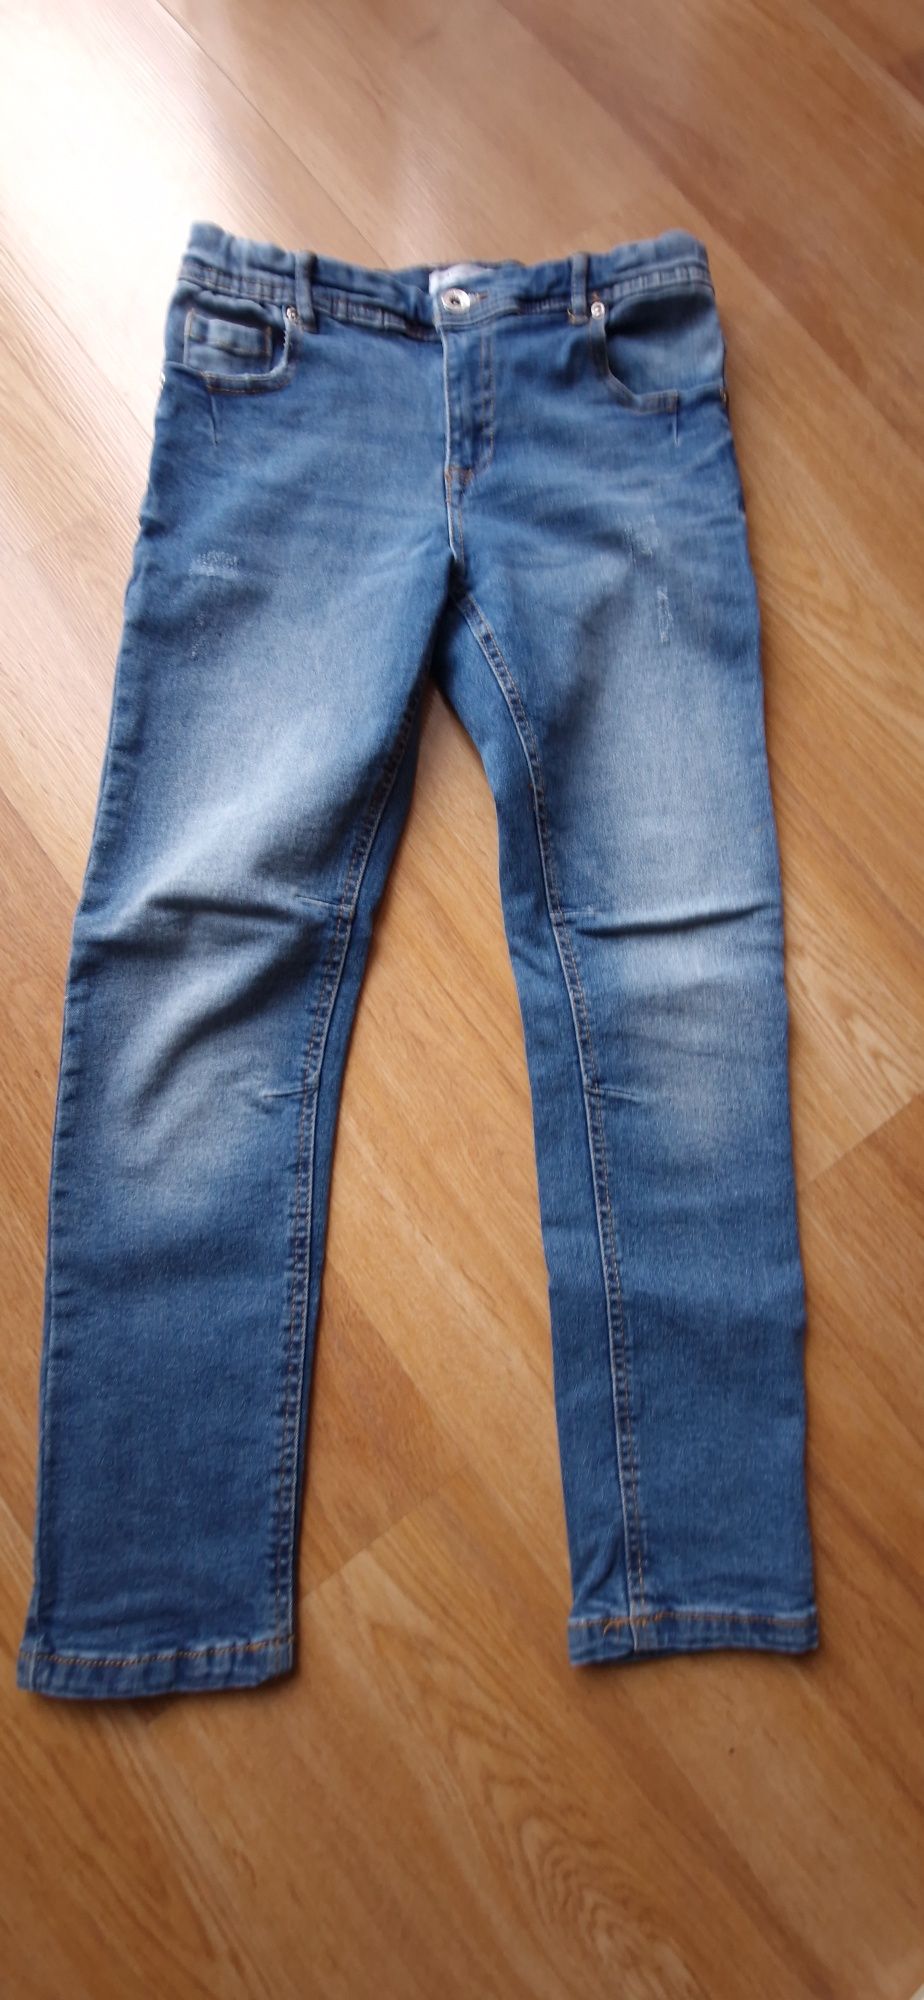 Spodnie jeansy Sinsay dla chłopca rozmiar 140